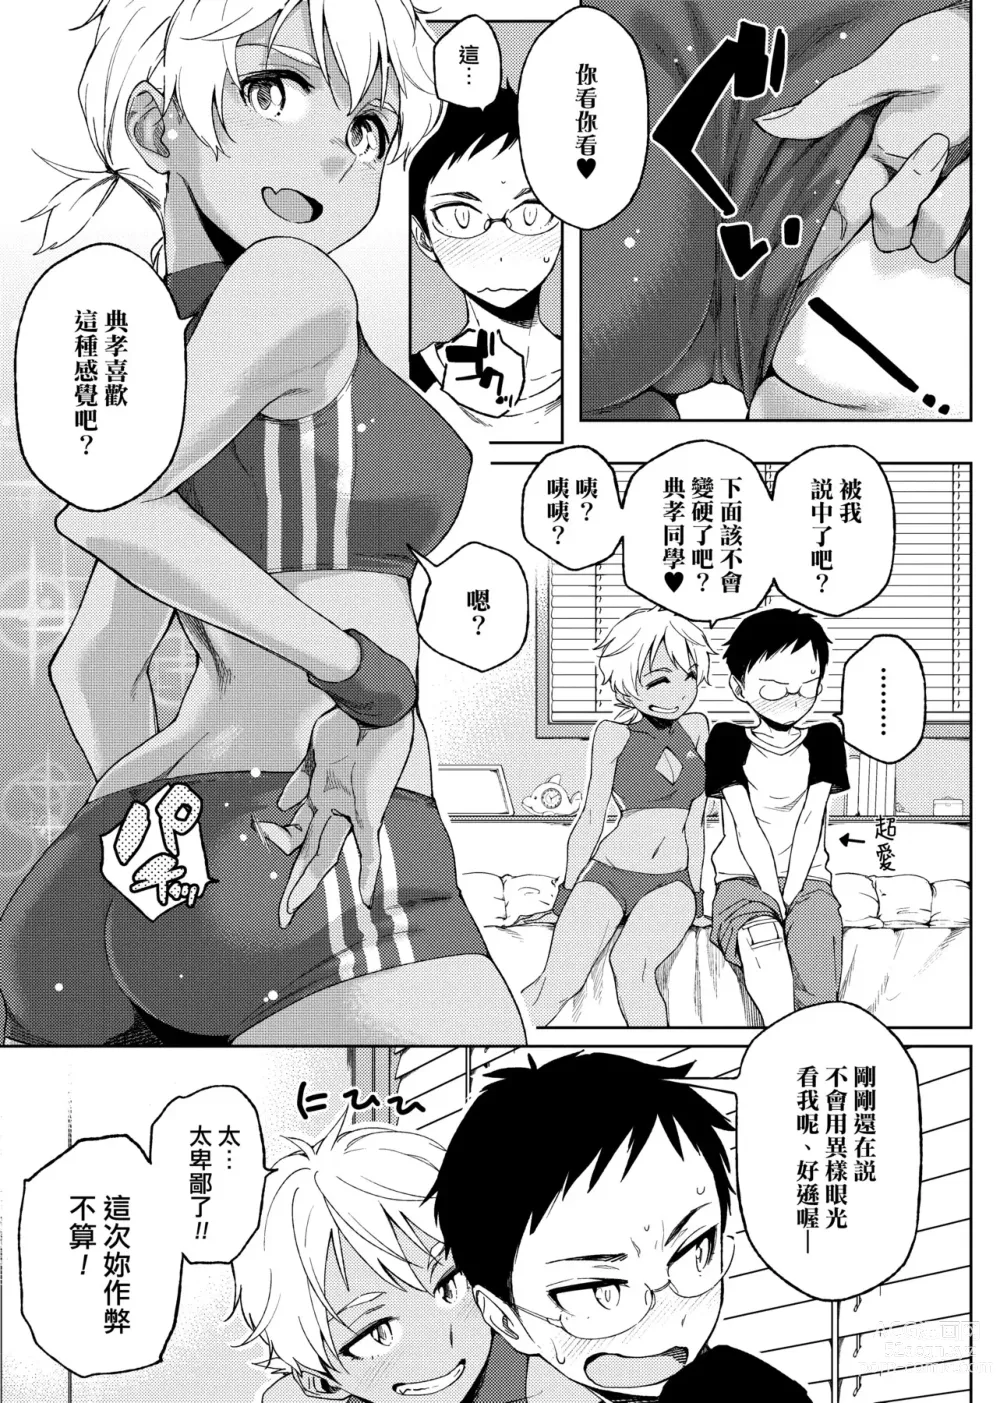 Page 204 of manga Natsu Koi Ota Girl - What Brings You to Japan?